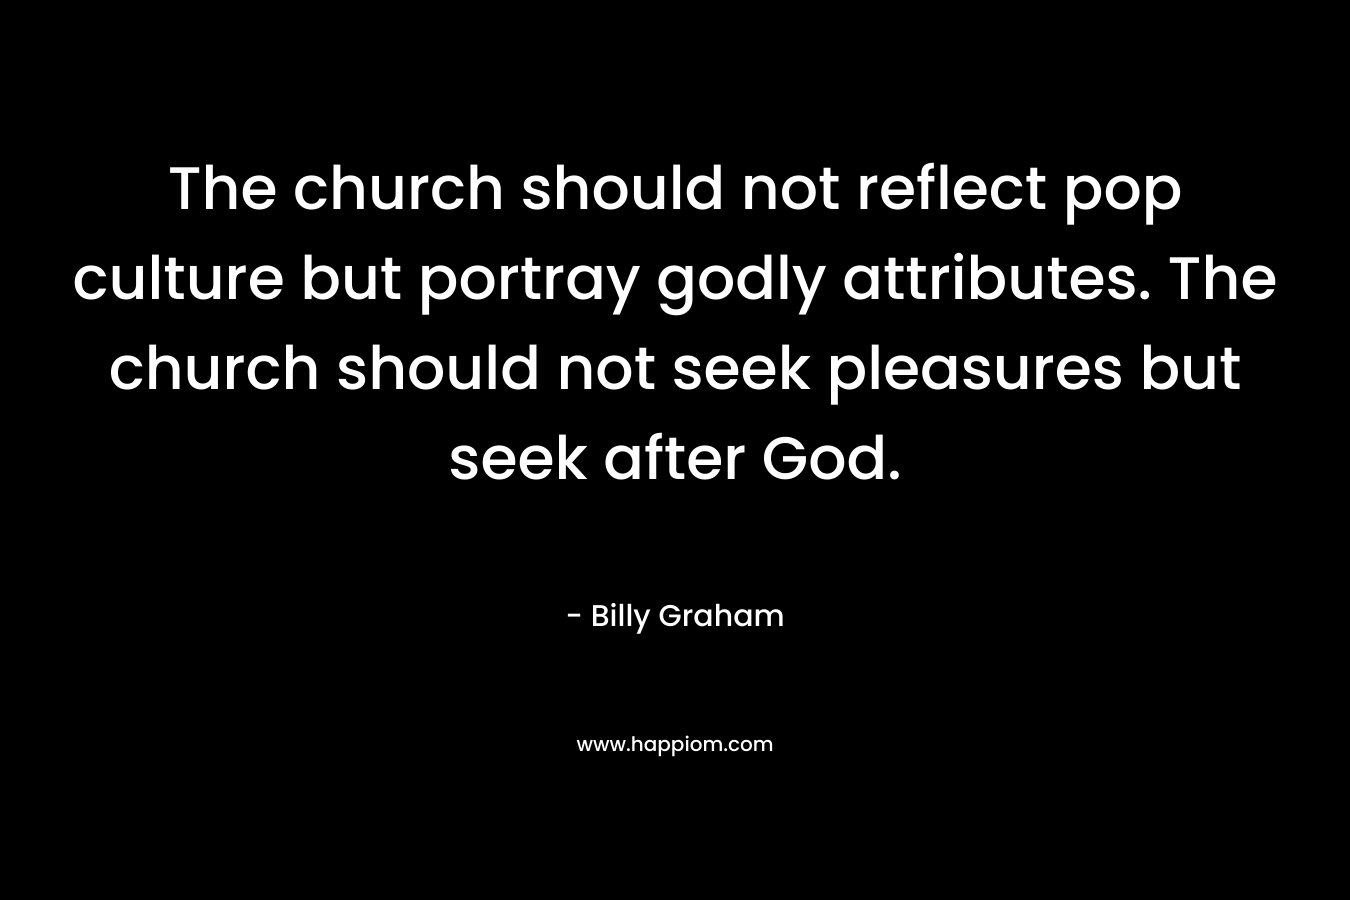 The church should not reflect pop culture but portray godly attributes. The church should not seek pleasures but seek after God.